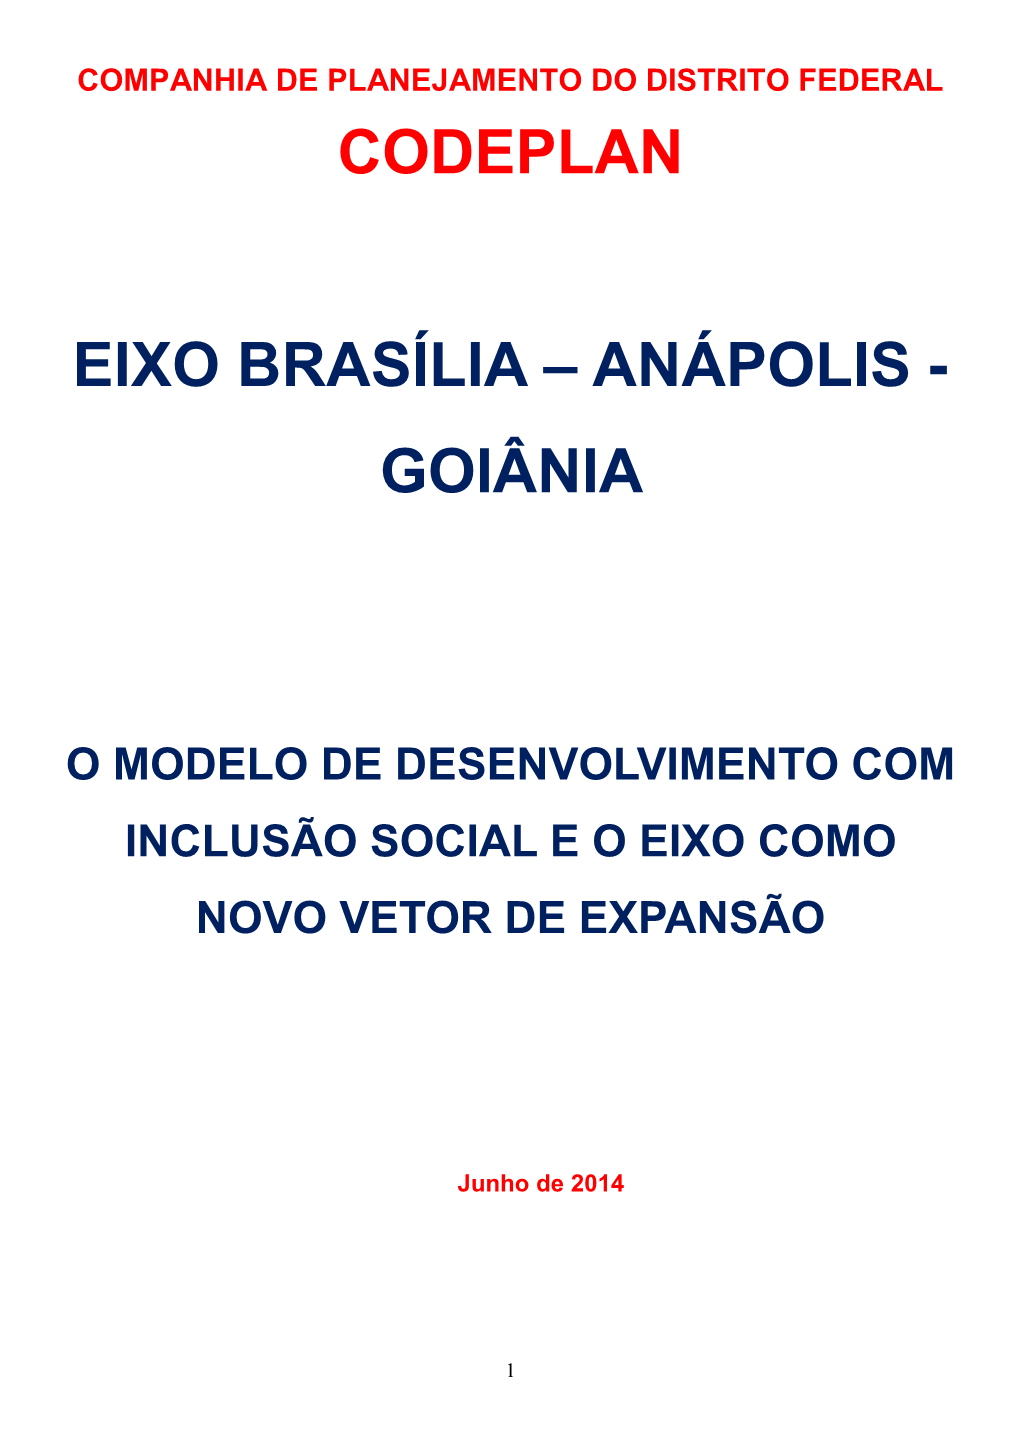 Eixo Brasilia-Anápolis-Goiânia